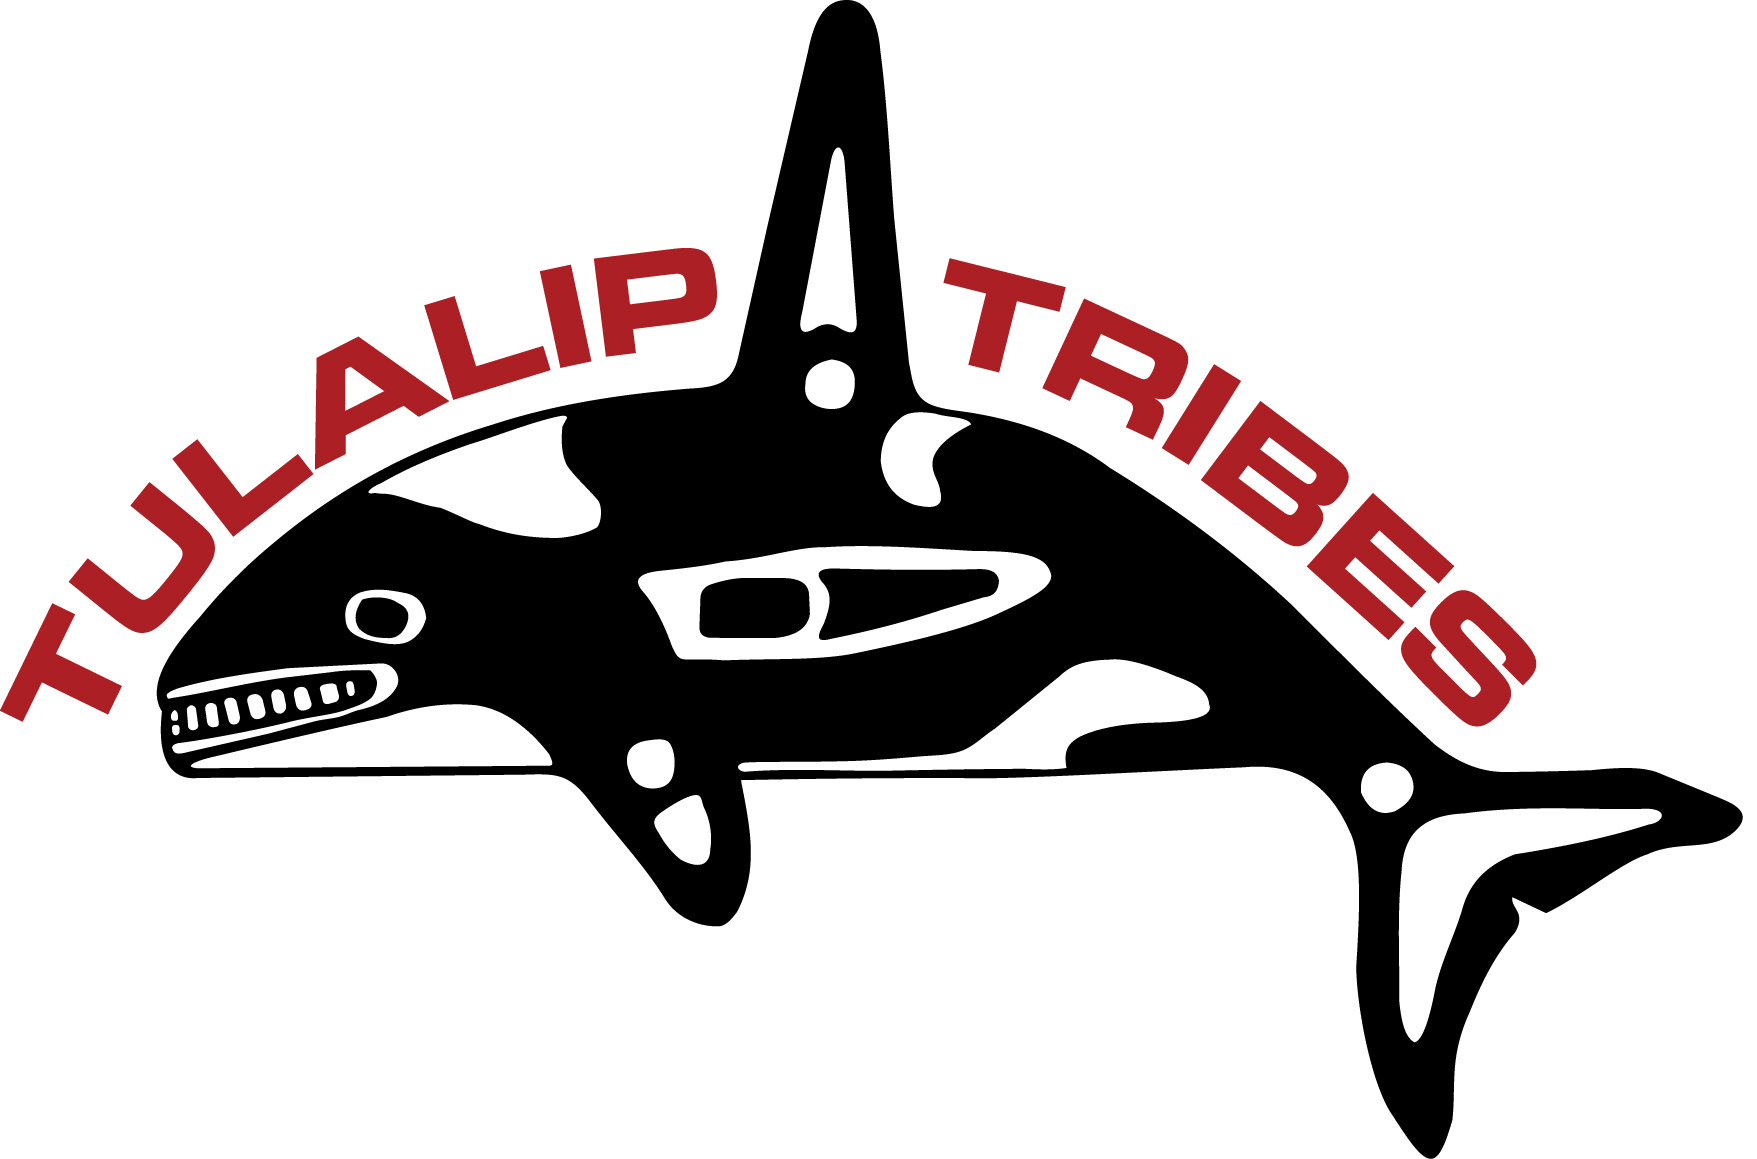 Tulalip logo 2009